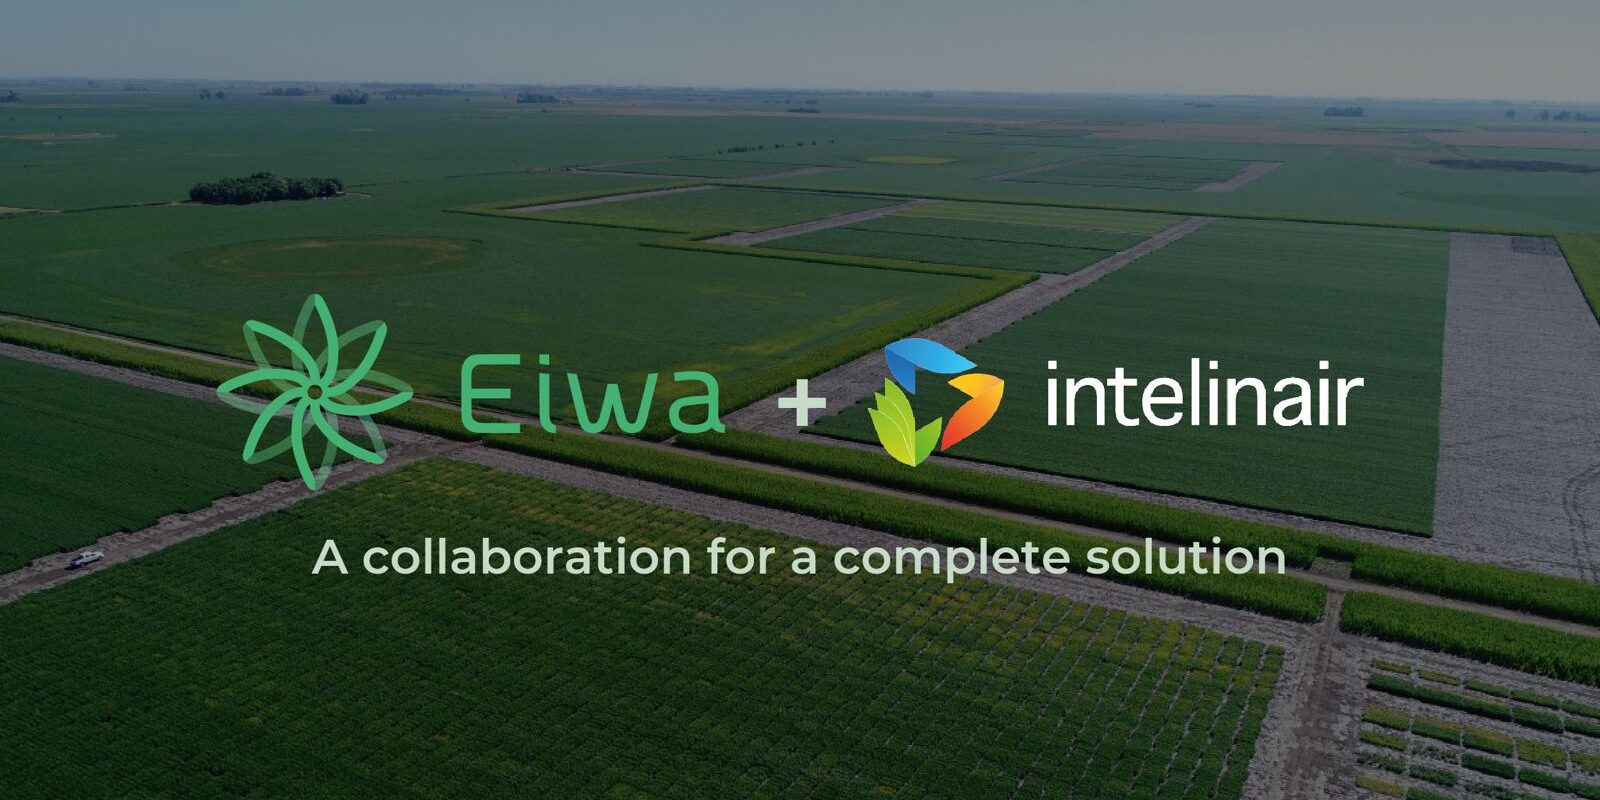 eiwa and intelinair collaboration